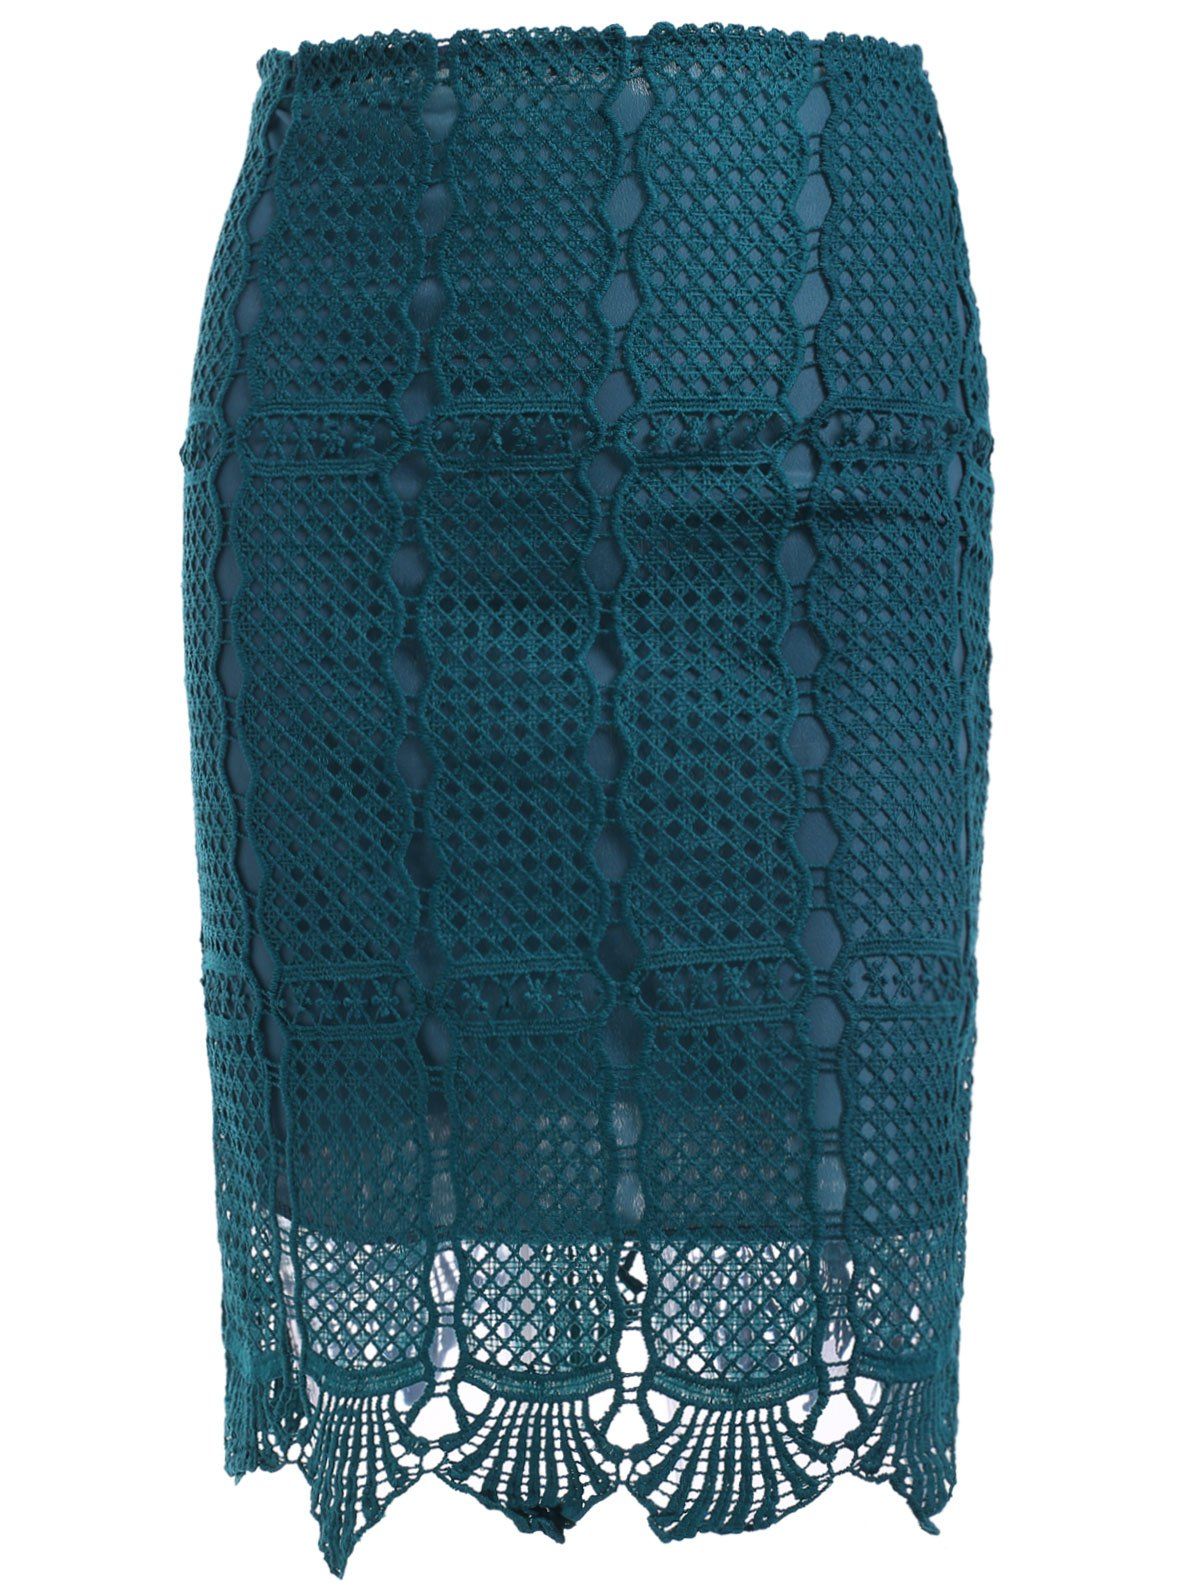 [19% OFF] Stylish Women's Crochet Pencil Skirt | Rosegal